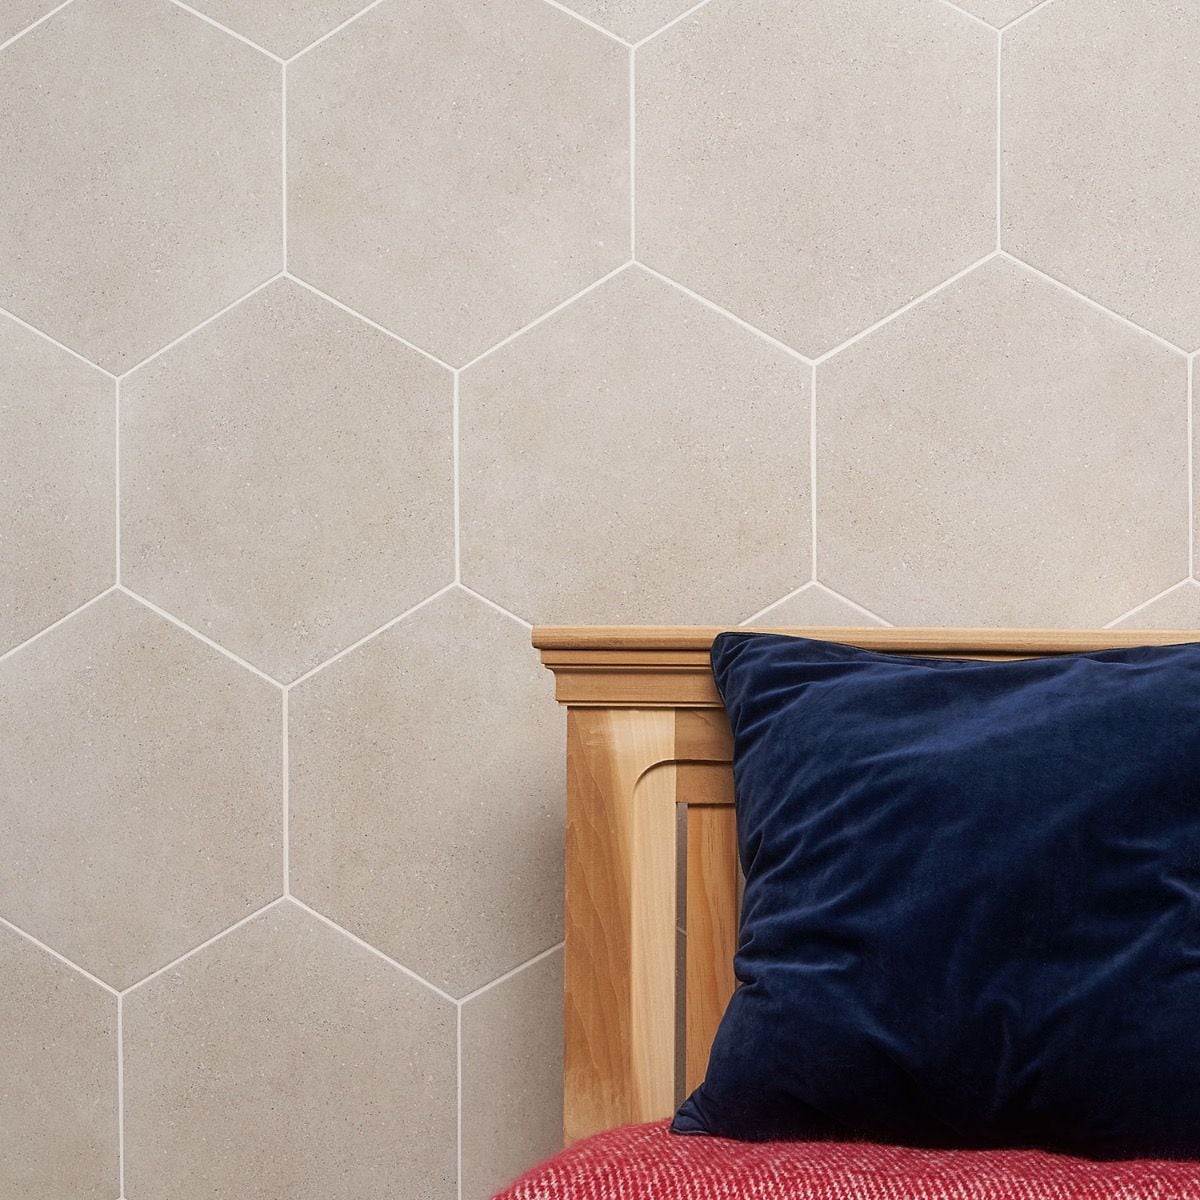 Cork and Velvet Wall Tiles Hexagon Wall Decor Set of 3 Choose Your